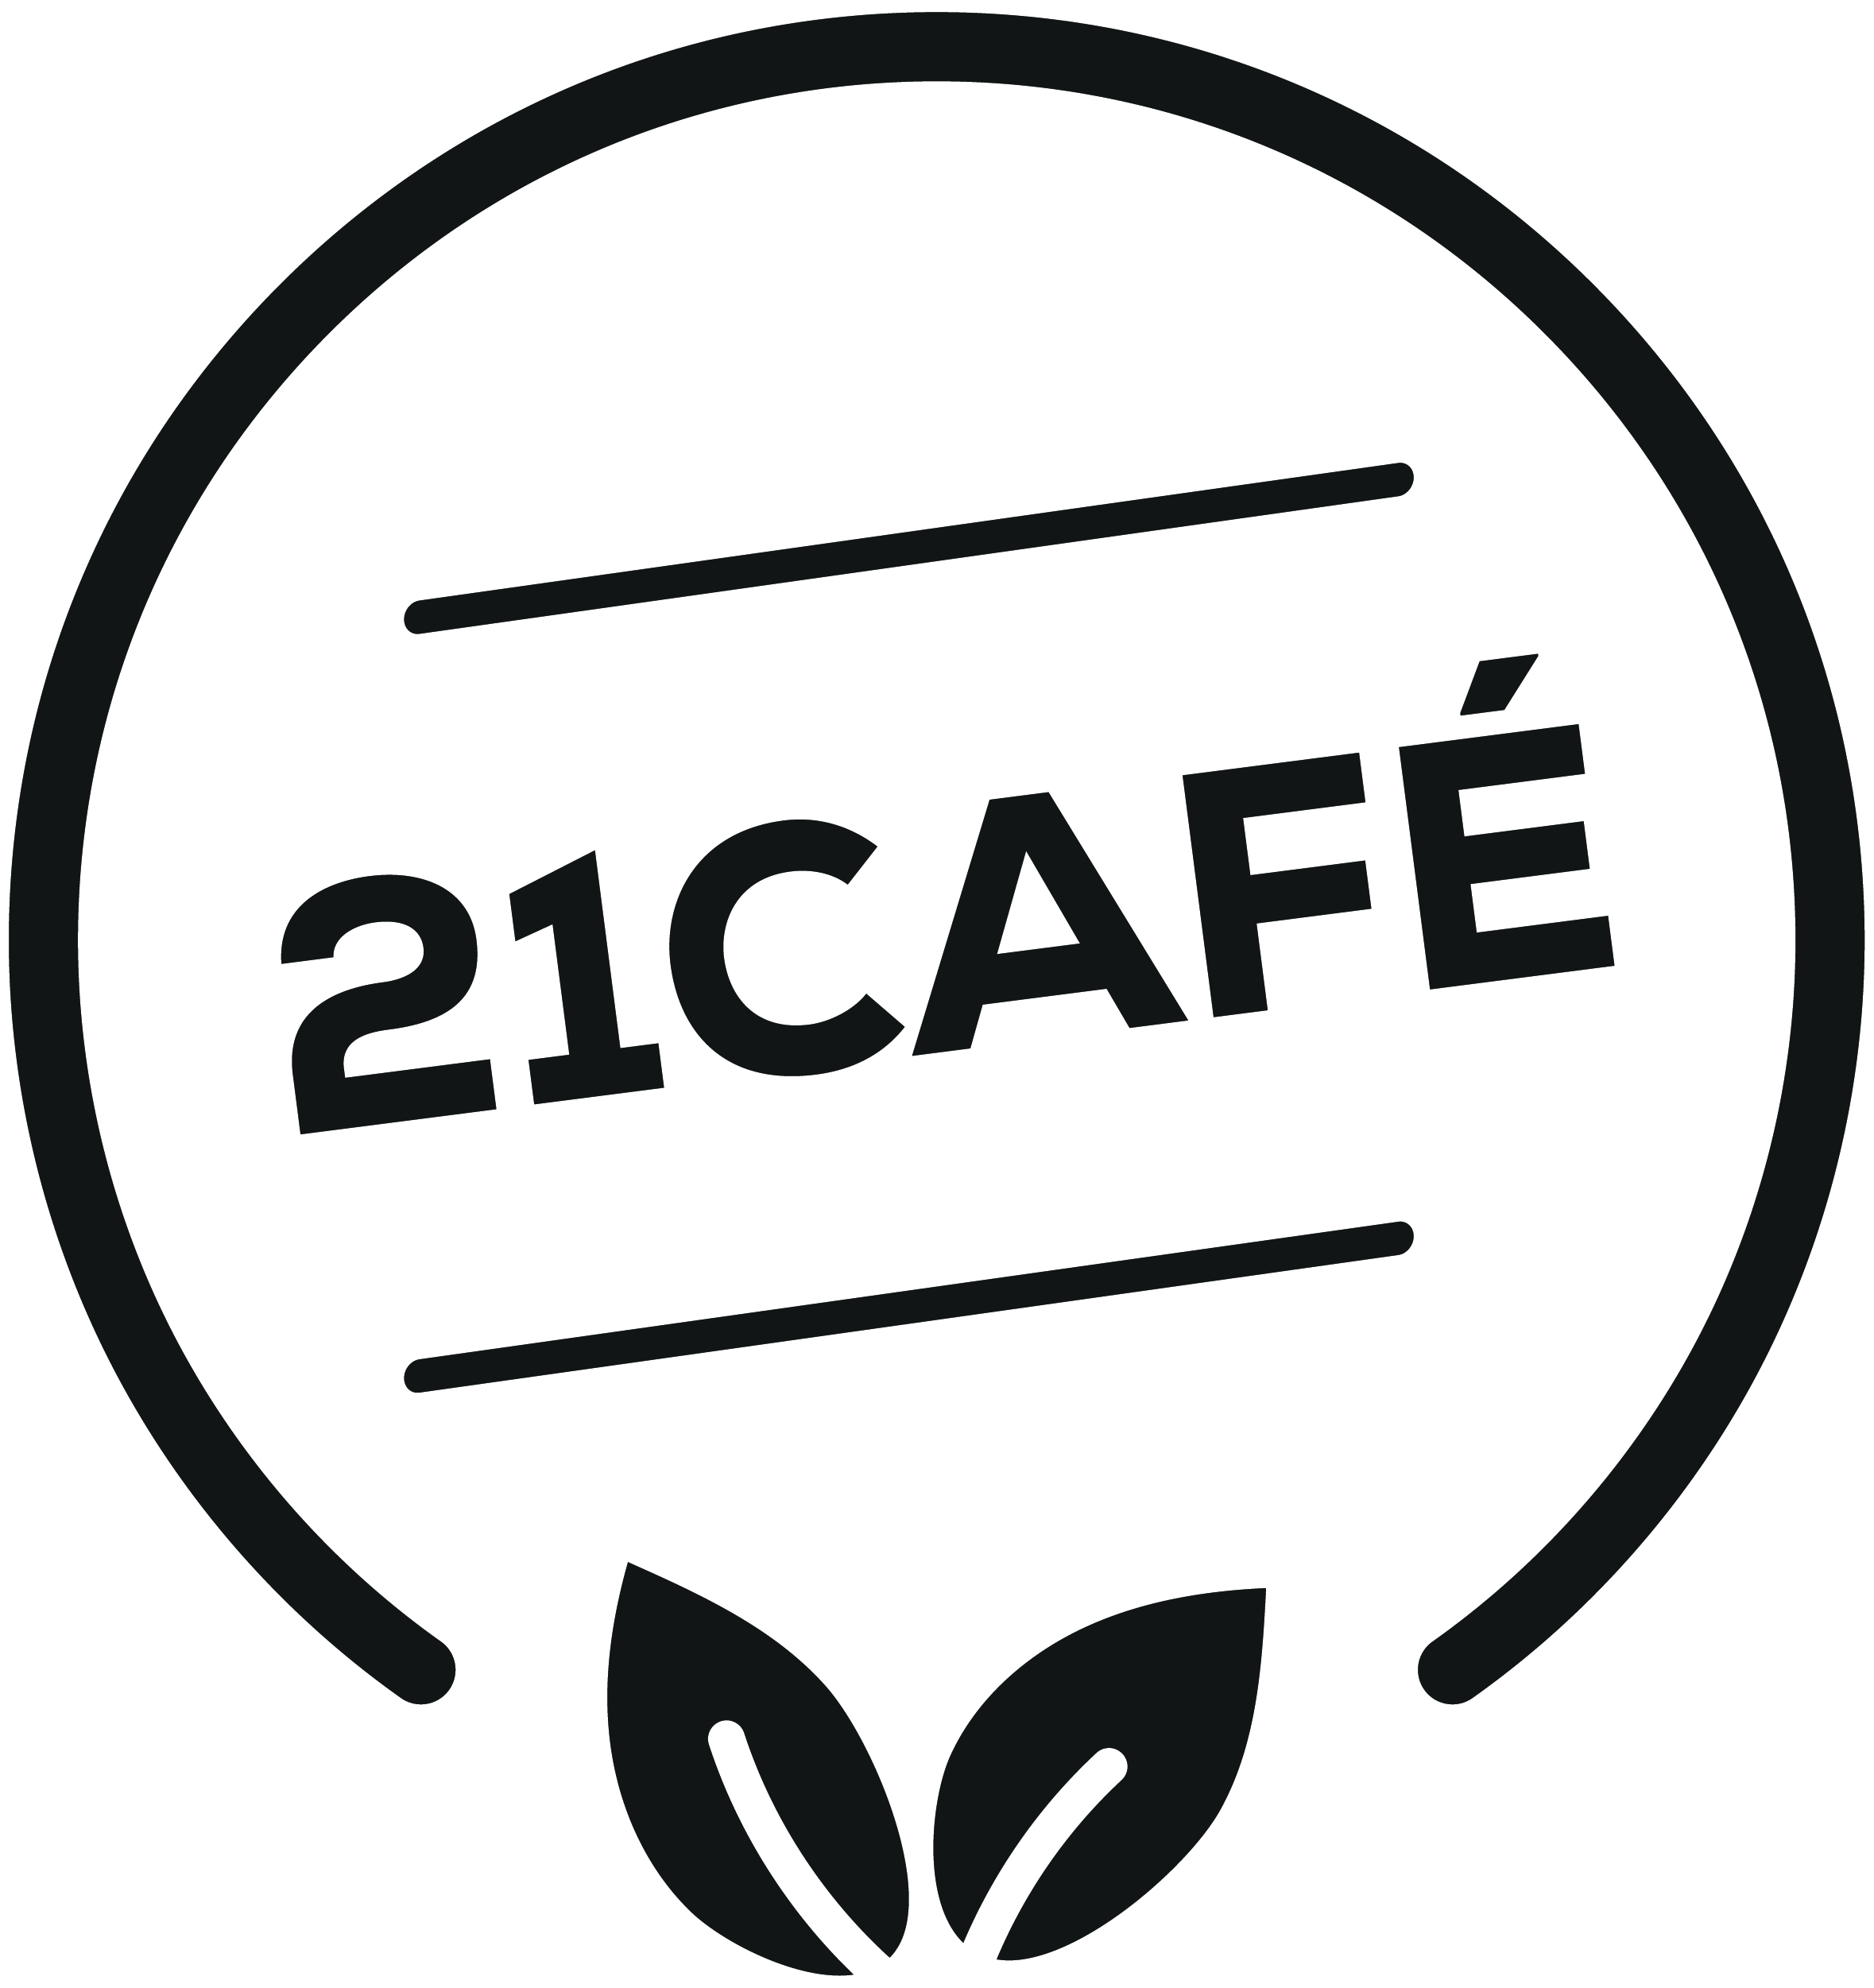 21cafe